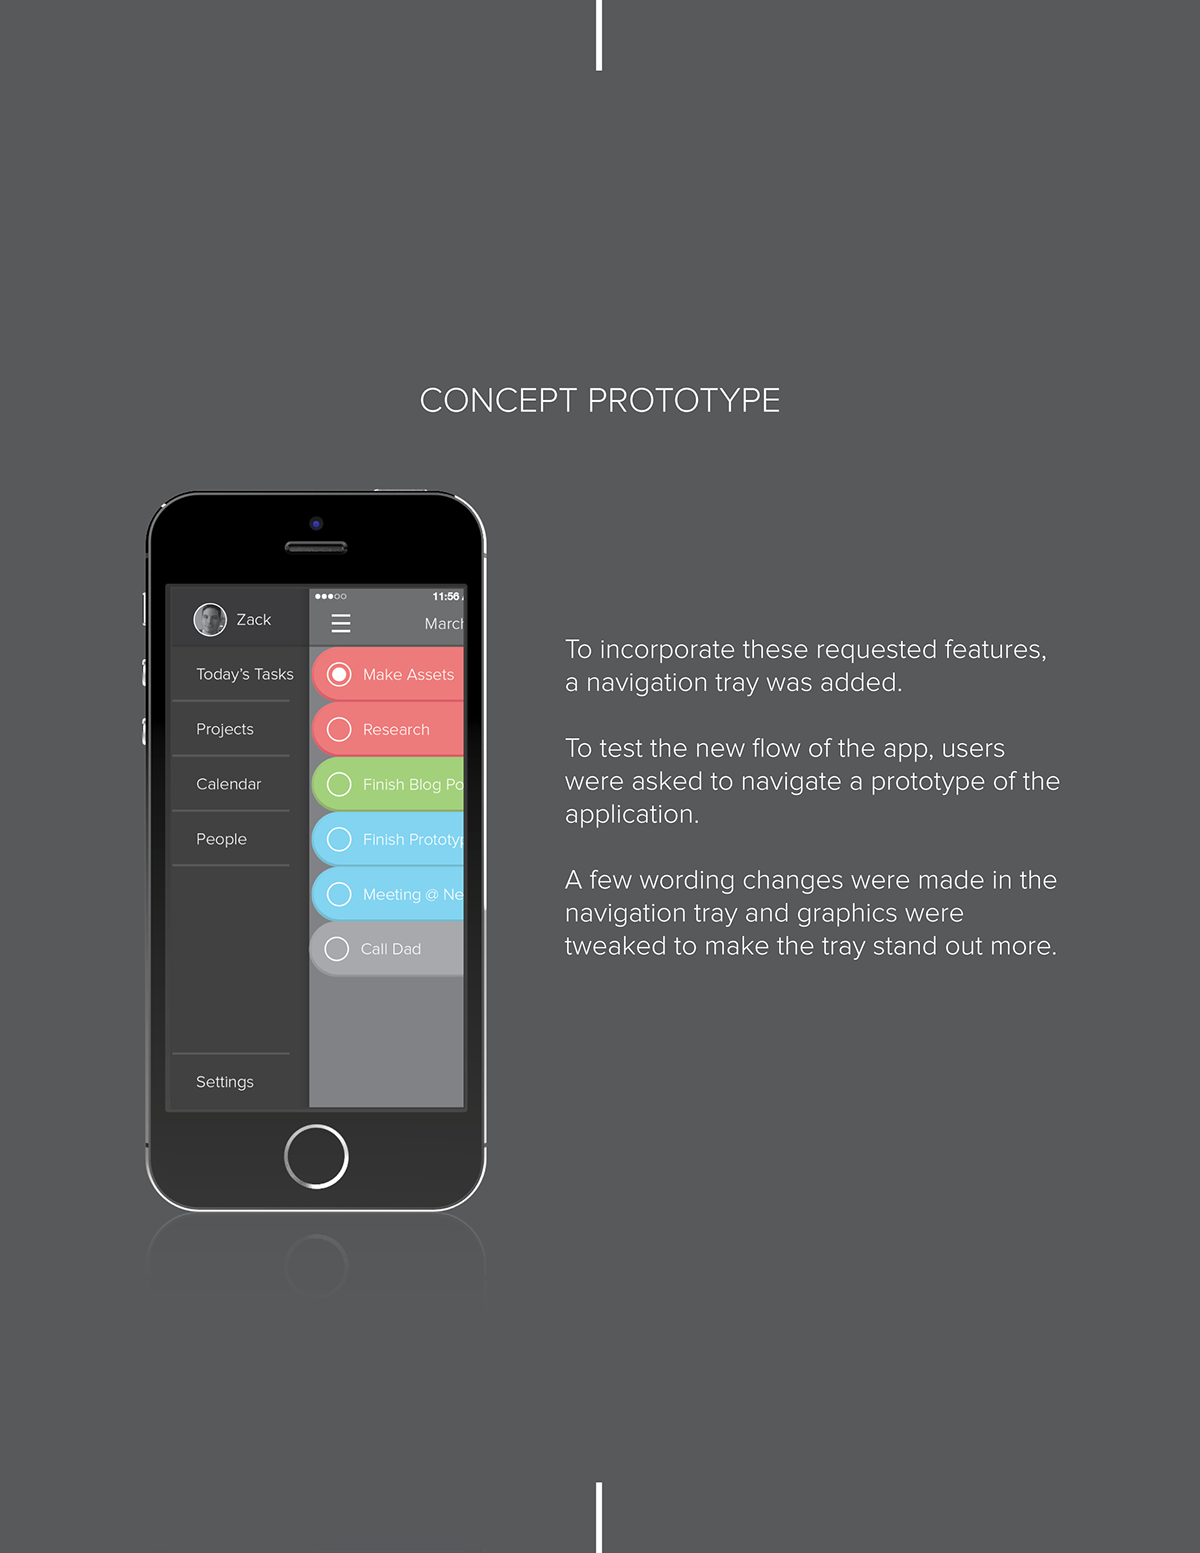 Productivity app